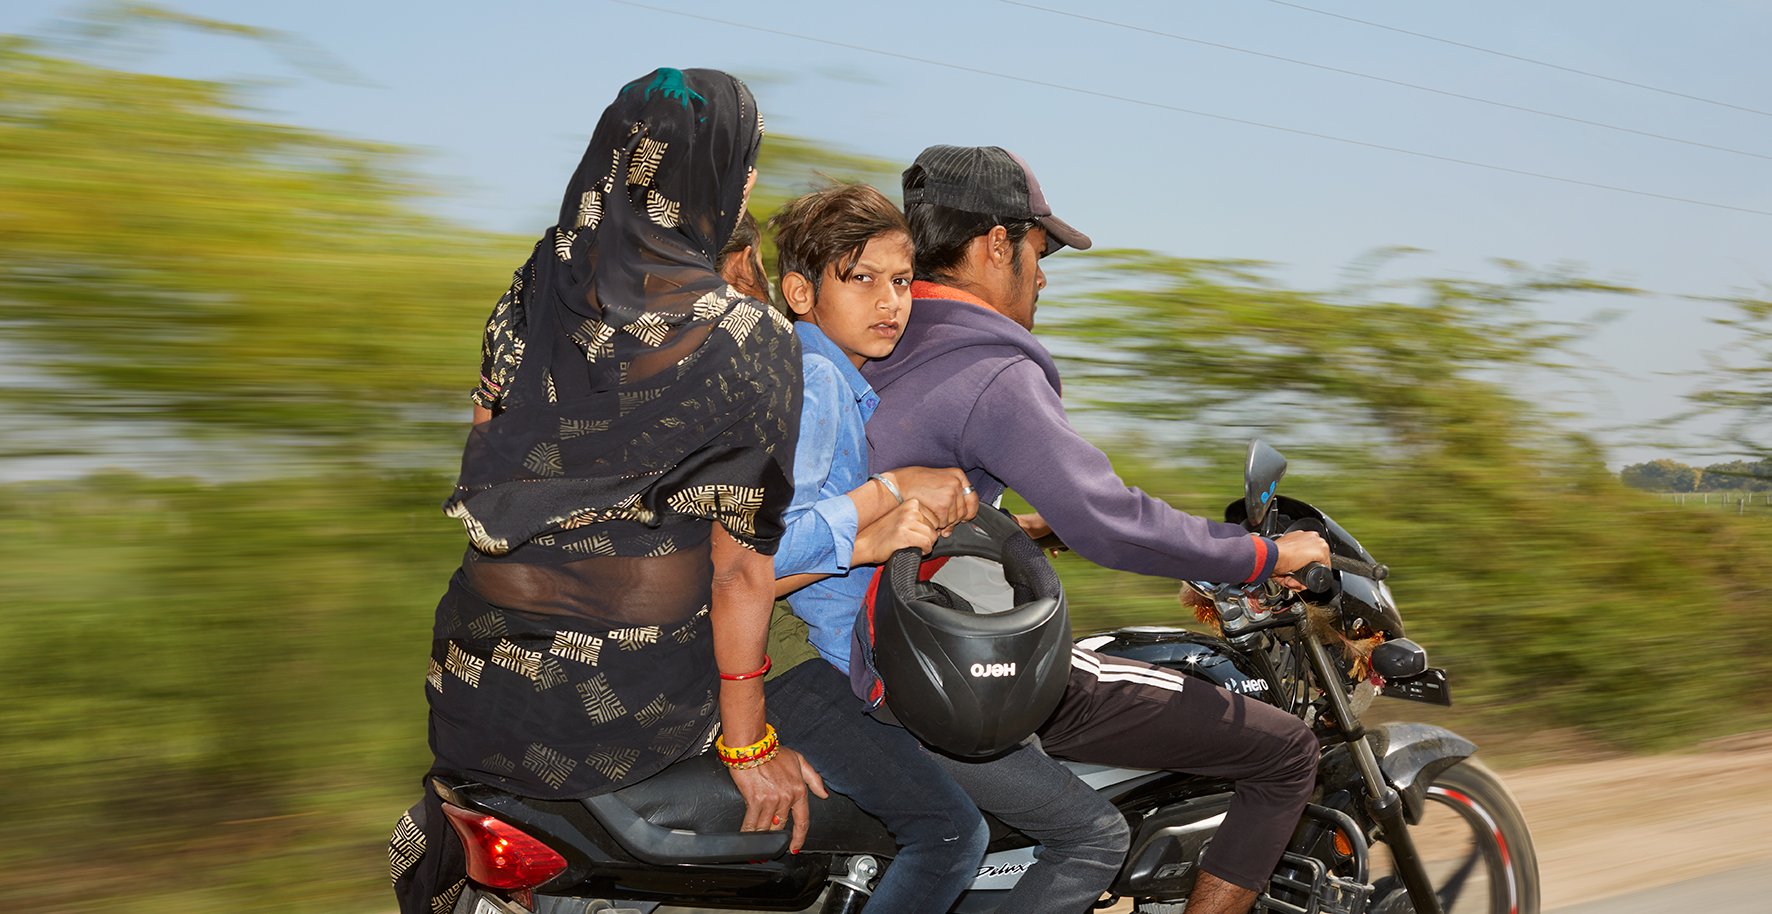  Motorbike portraits shot on a Rajasthan road trip in India.  